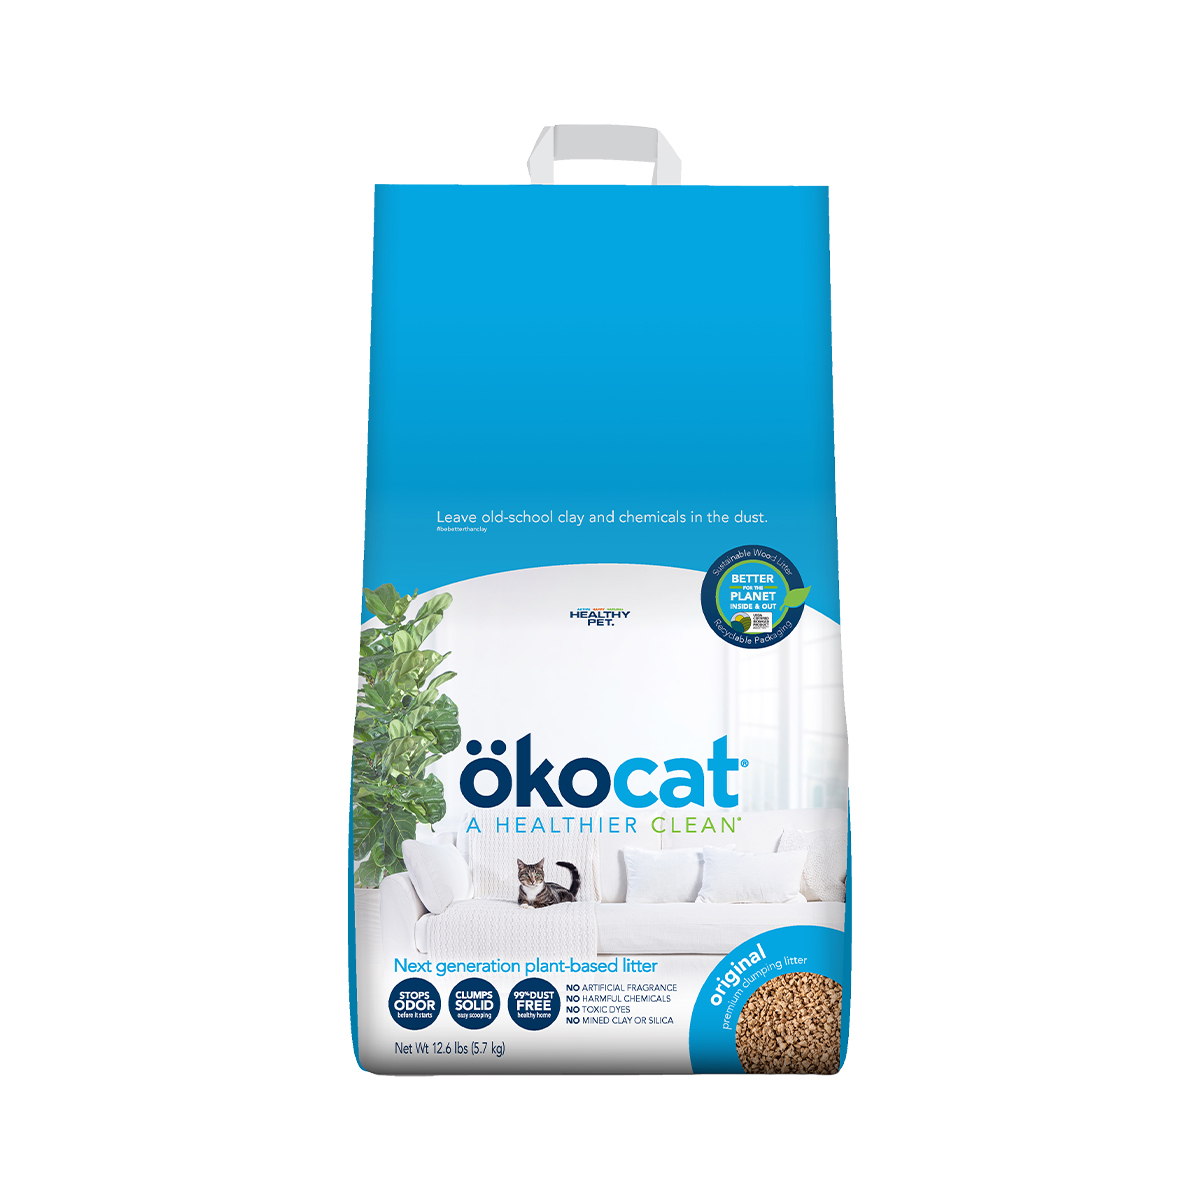 Cats Best Oko Plus Arena Para Gato 100% Compostable 8.6 Kg